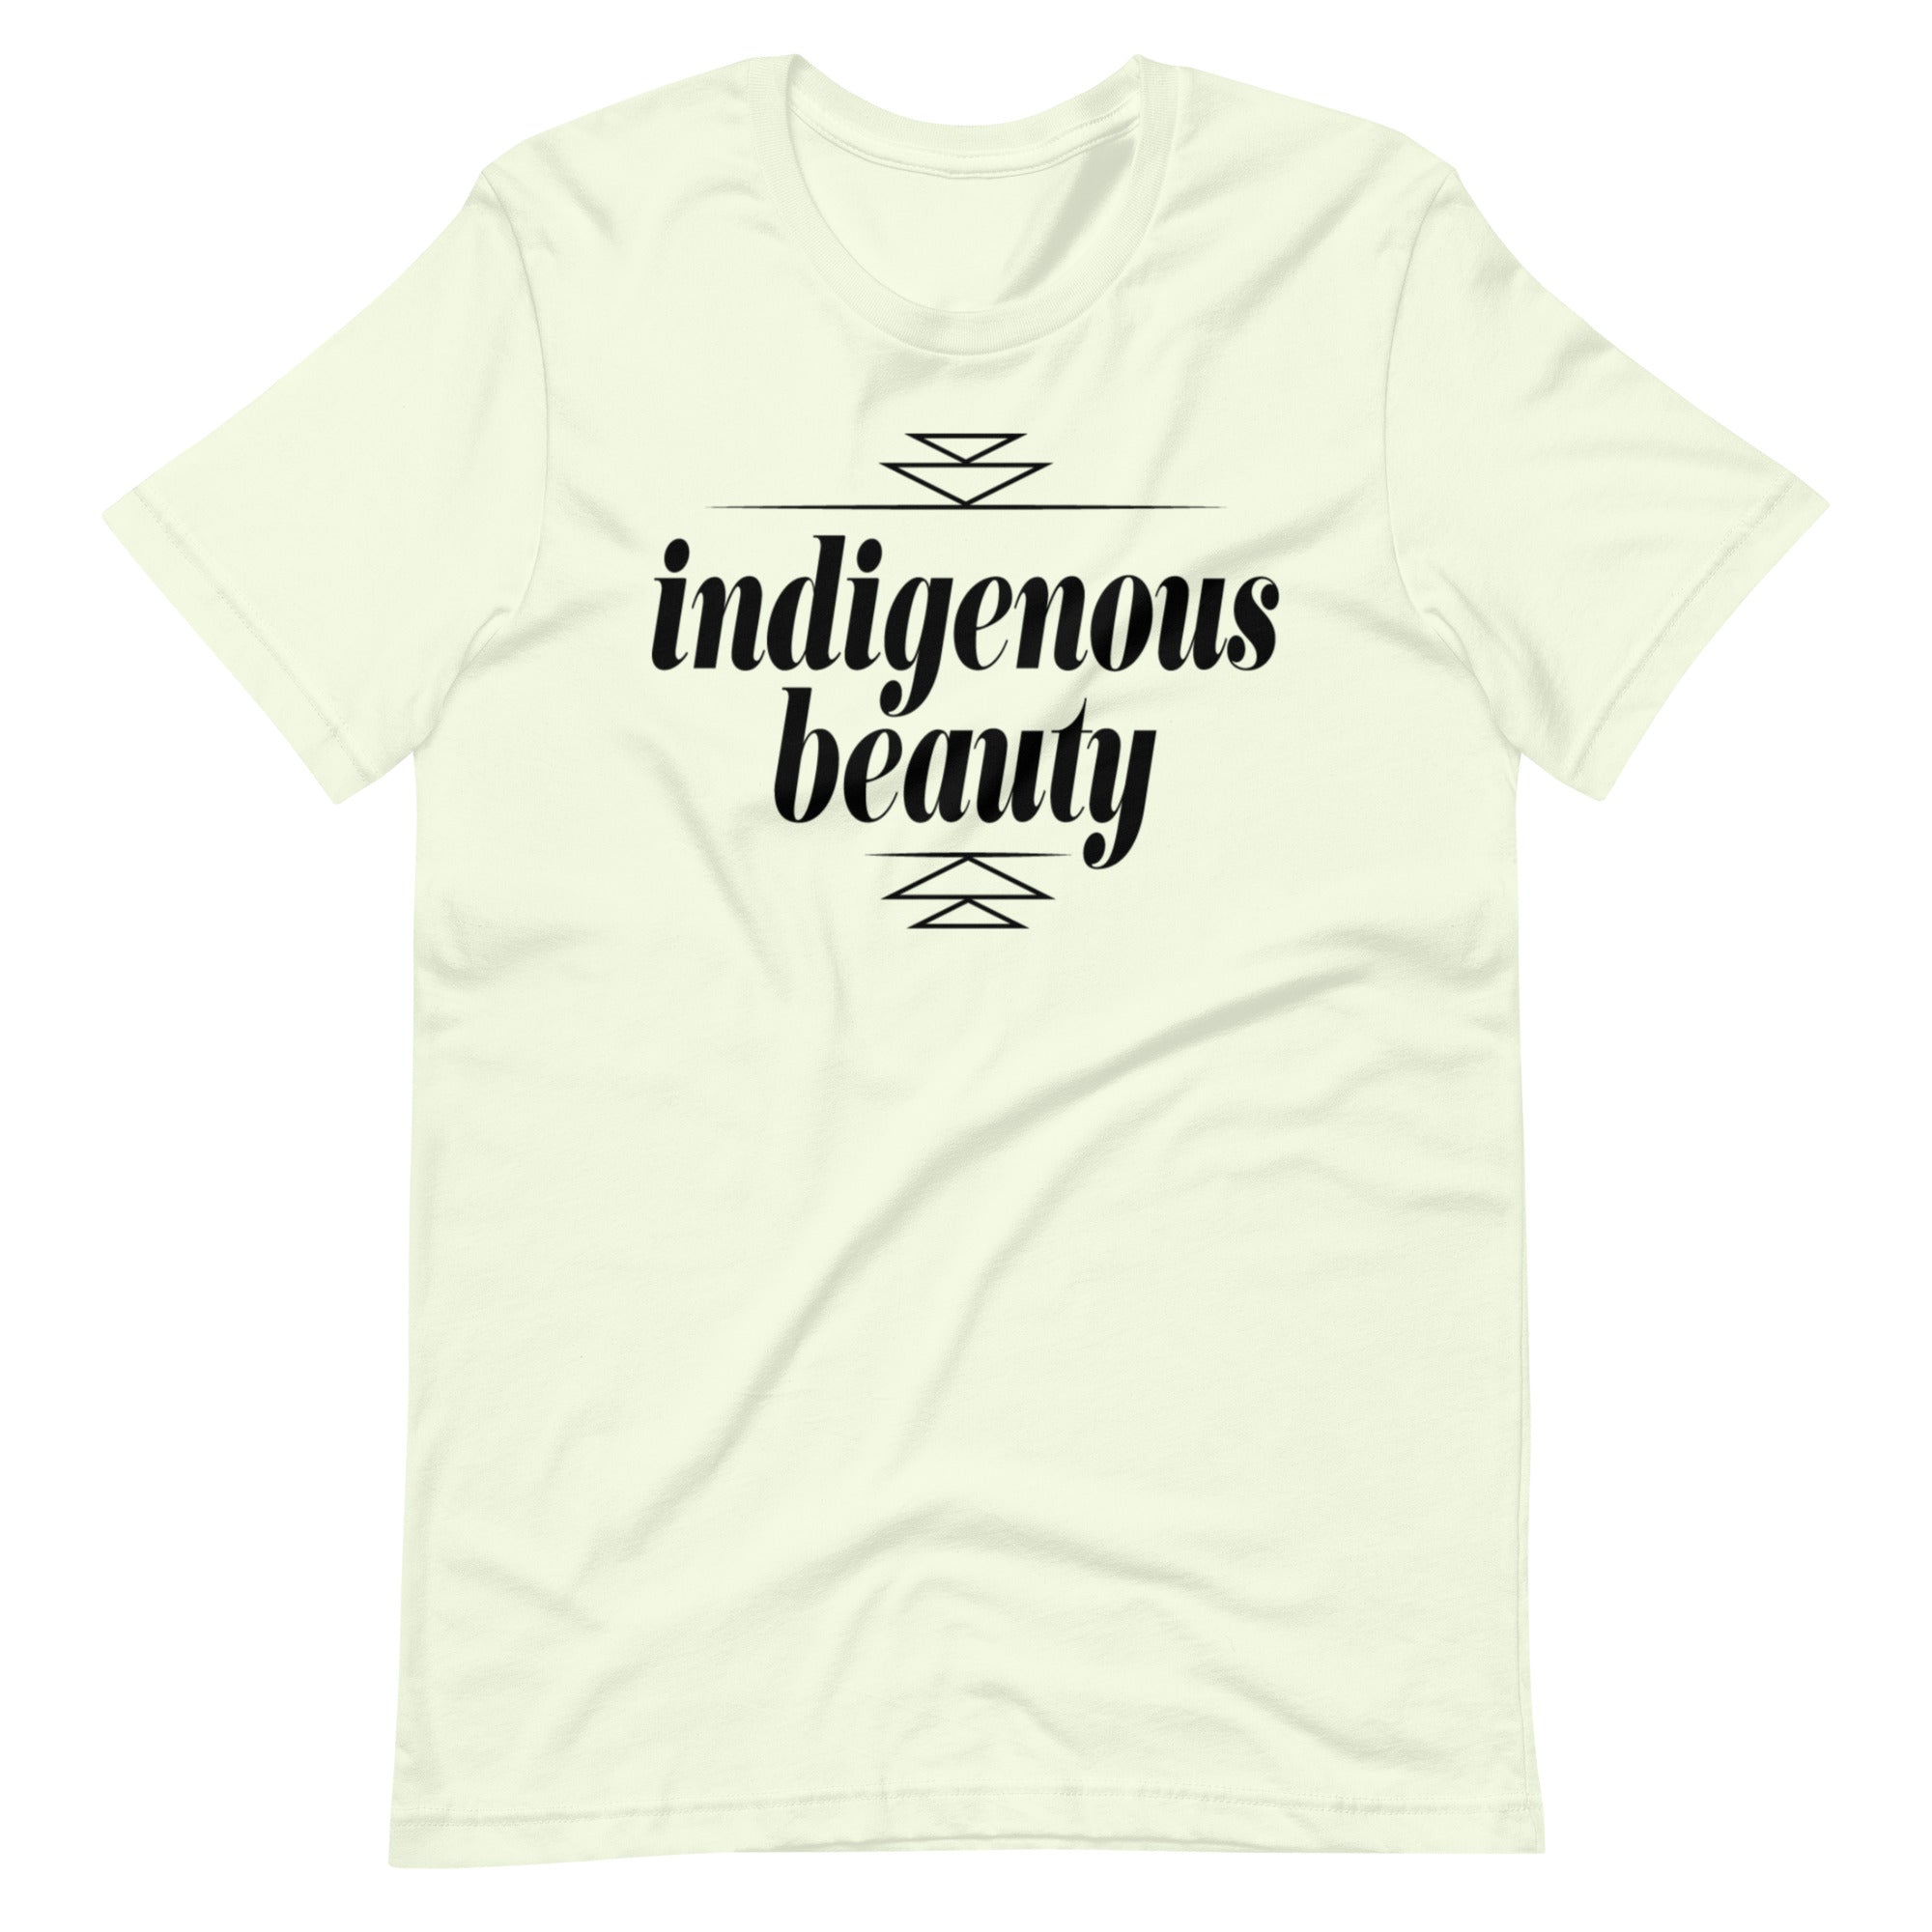 Indigenous Beauty t-shirt